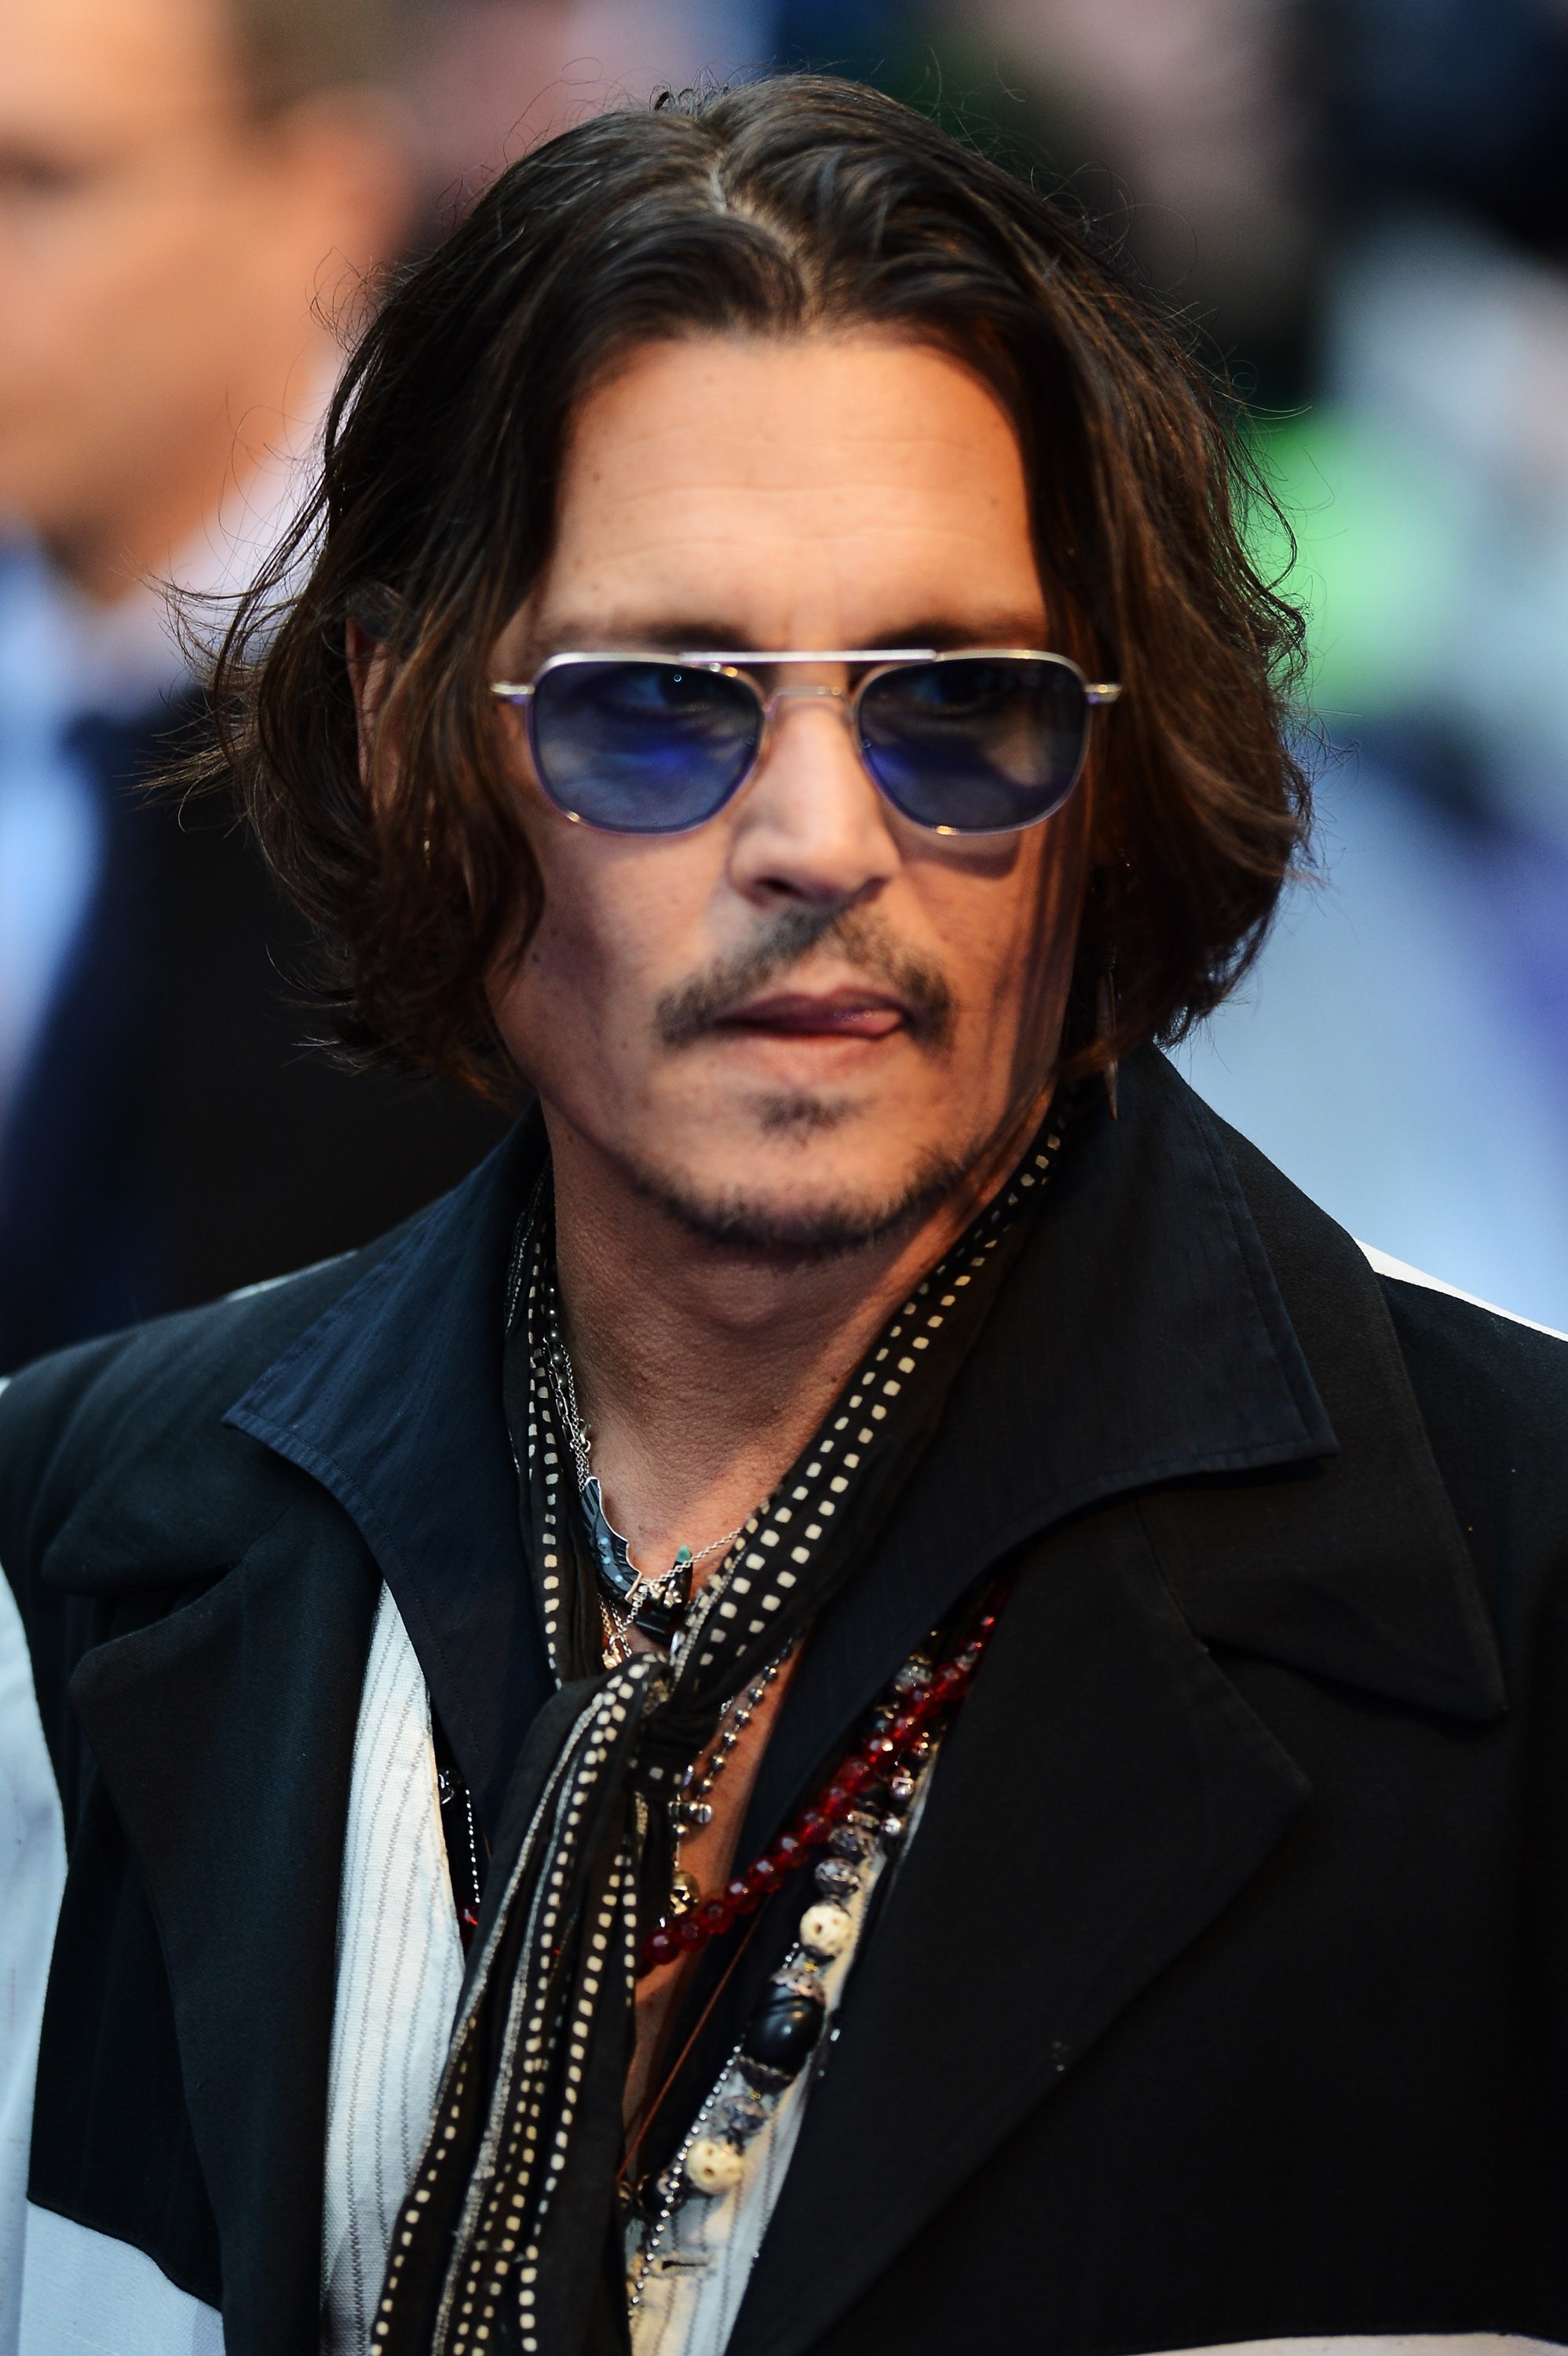 Johnny Depp Photoshoot 2012 In 2019 Johnny Depp